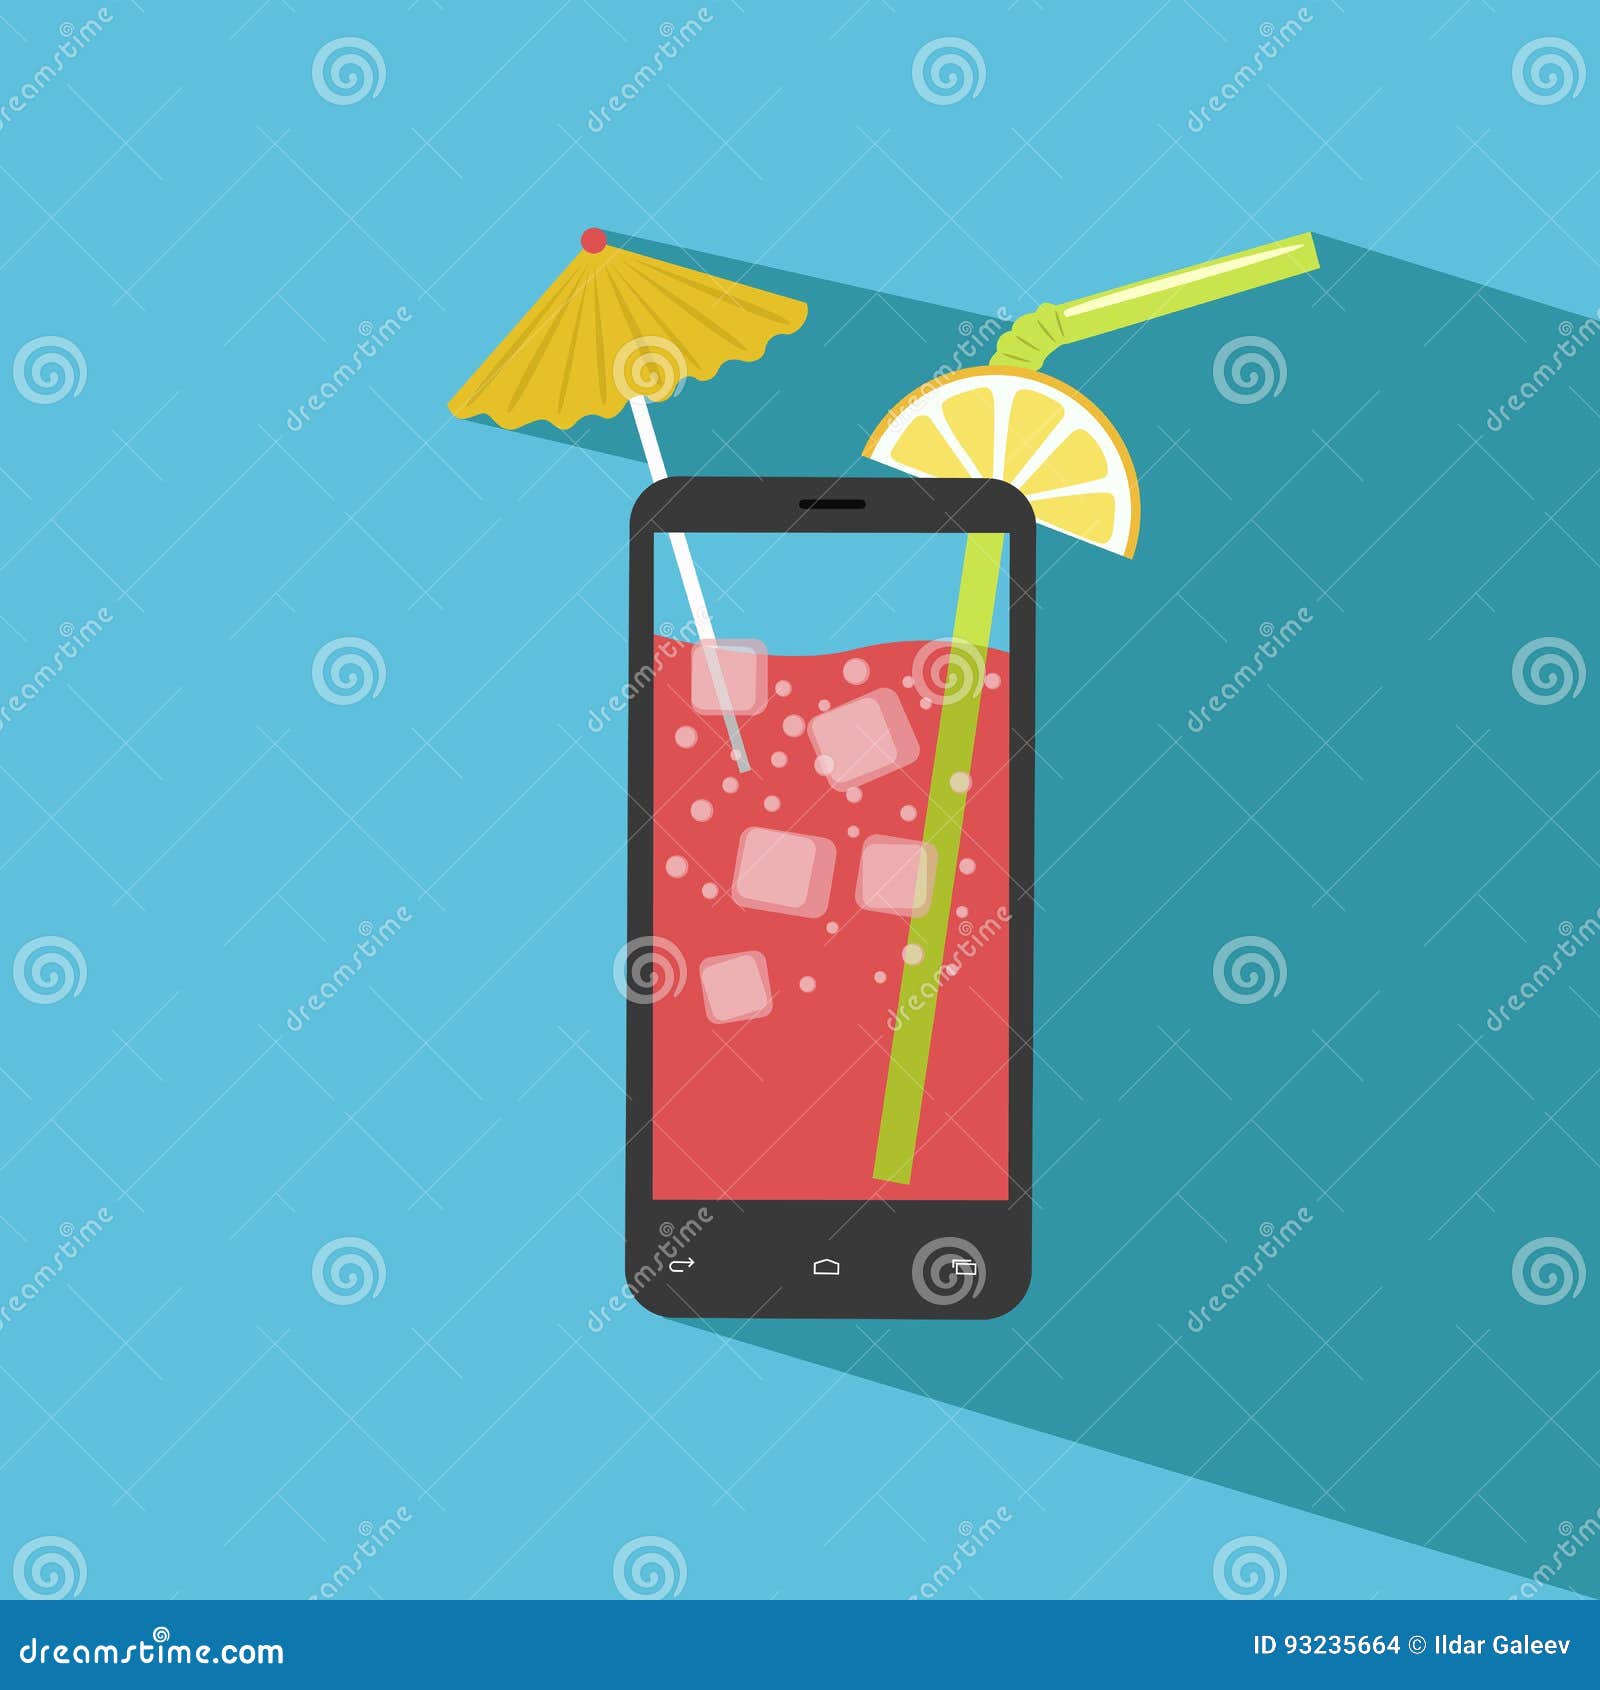 smartphone filled with fresh juice. icecubes, umbrella, slice of lemon, straw